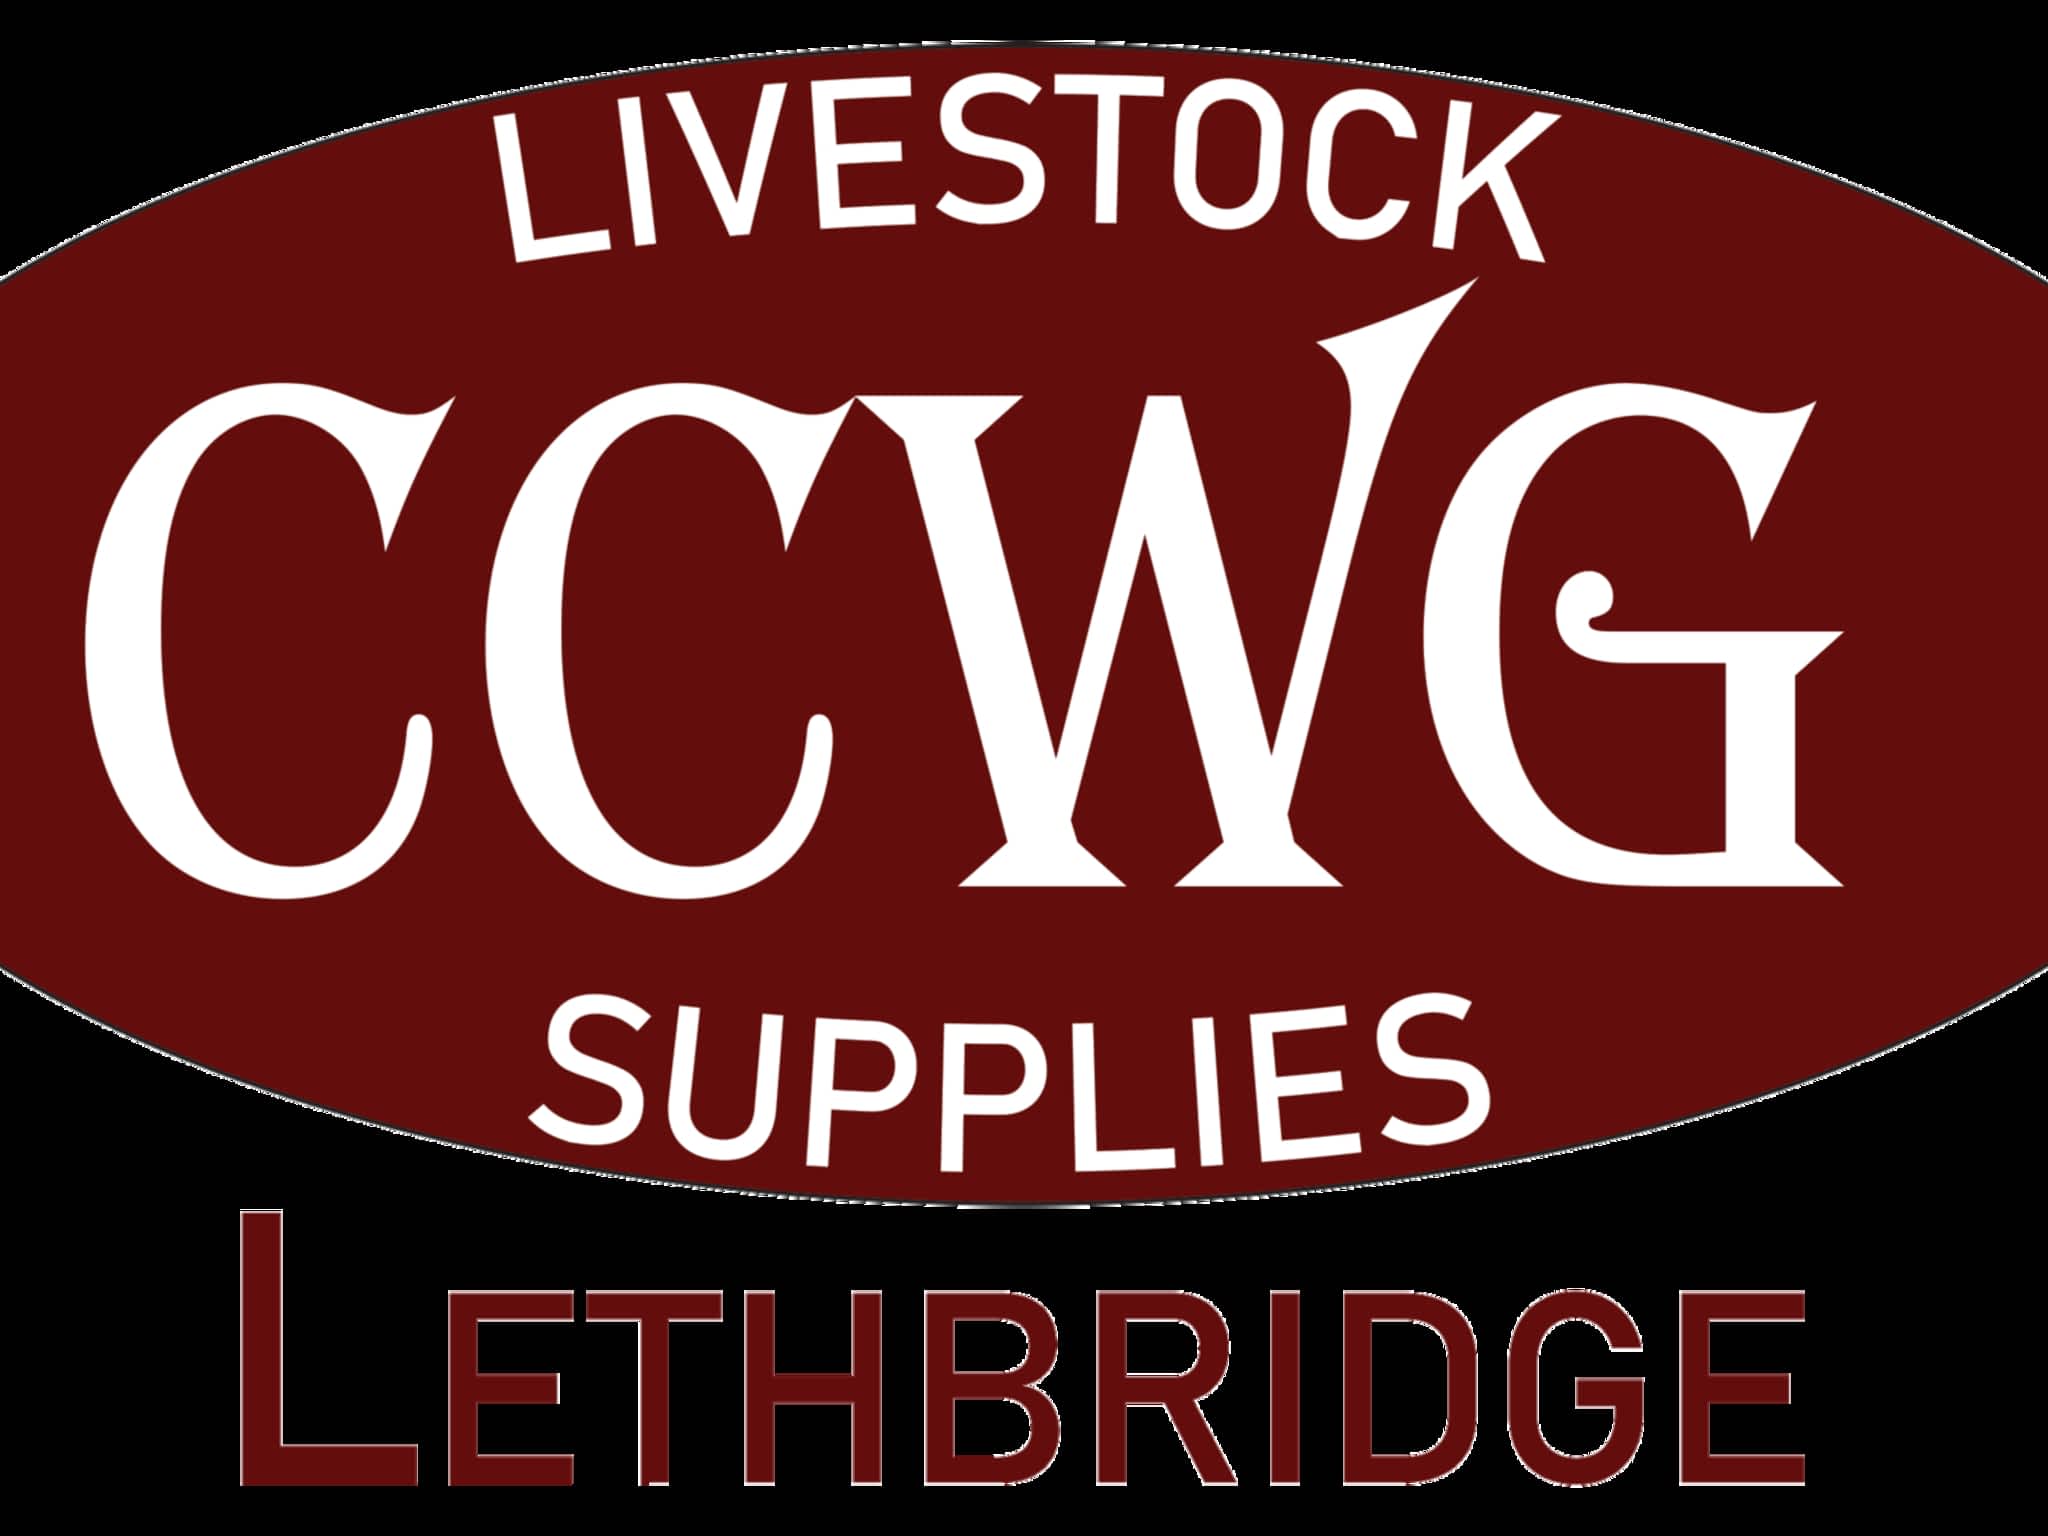 photo CCWG Livestock Supplies Ltd